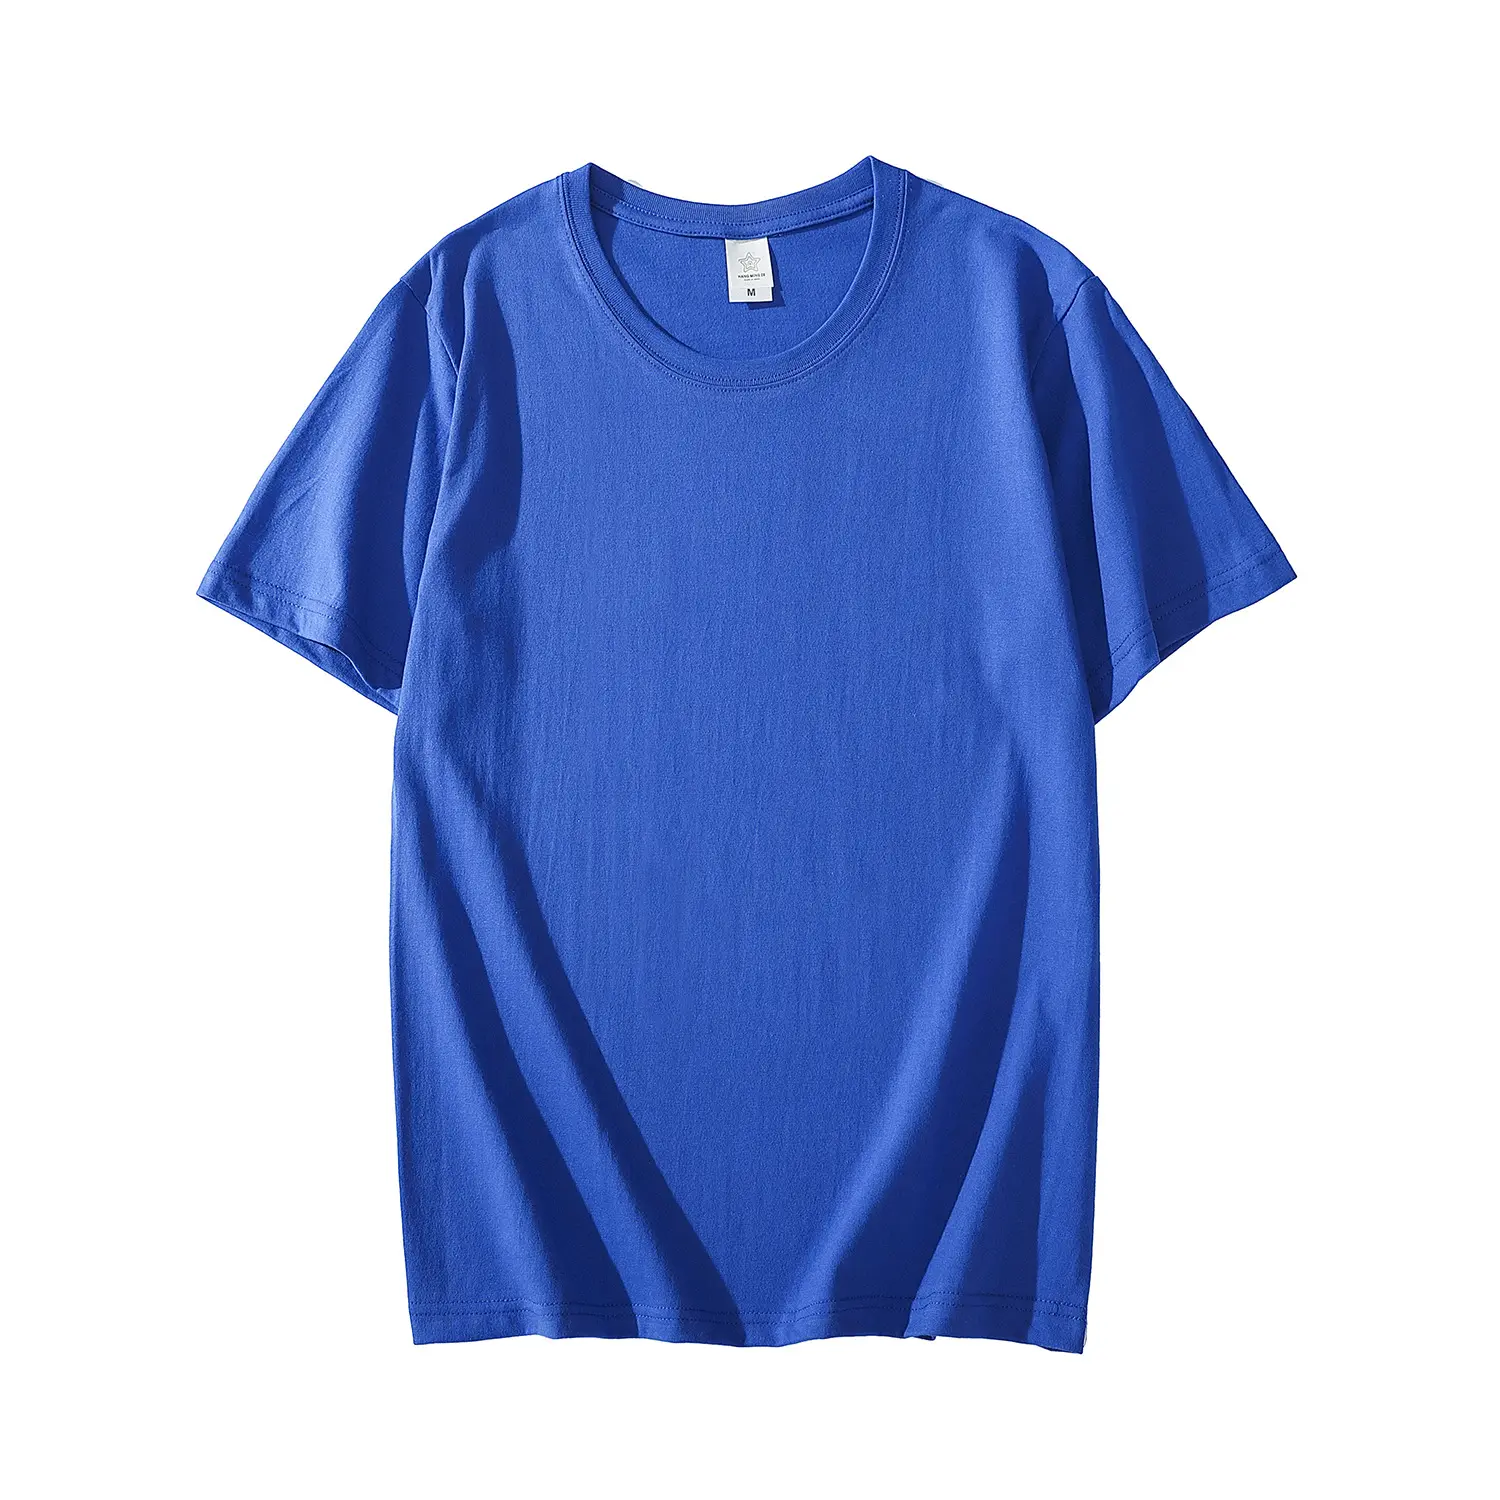 Fashion Relax Fit Super Soft Plus Size Camiseta Deporte Blank 100% Cotton Round Neck Big Men's T-shirts Oversize